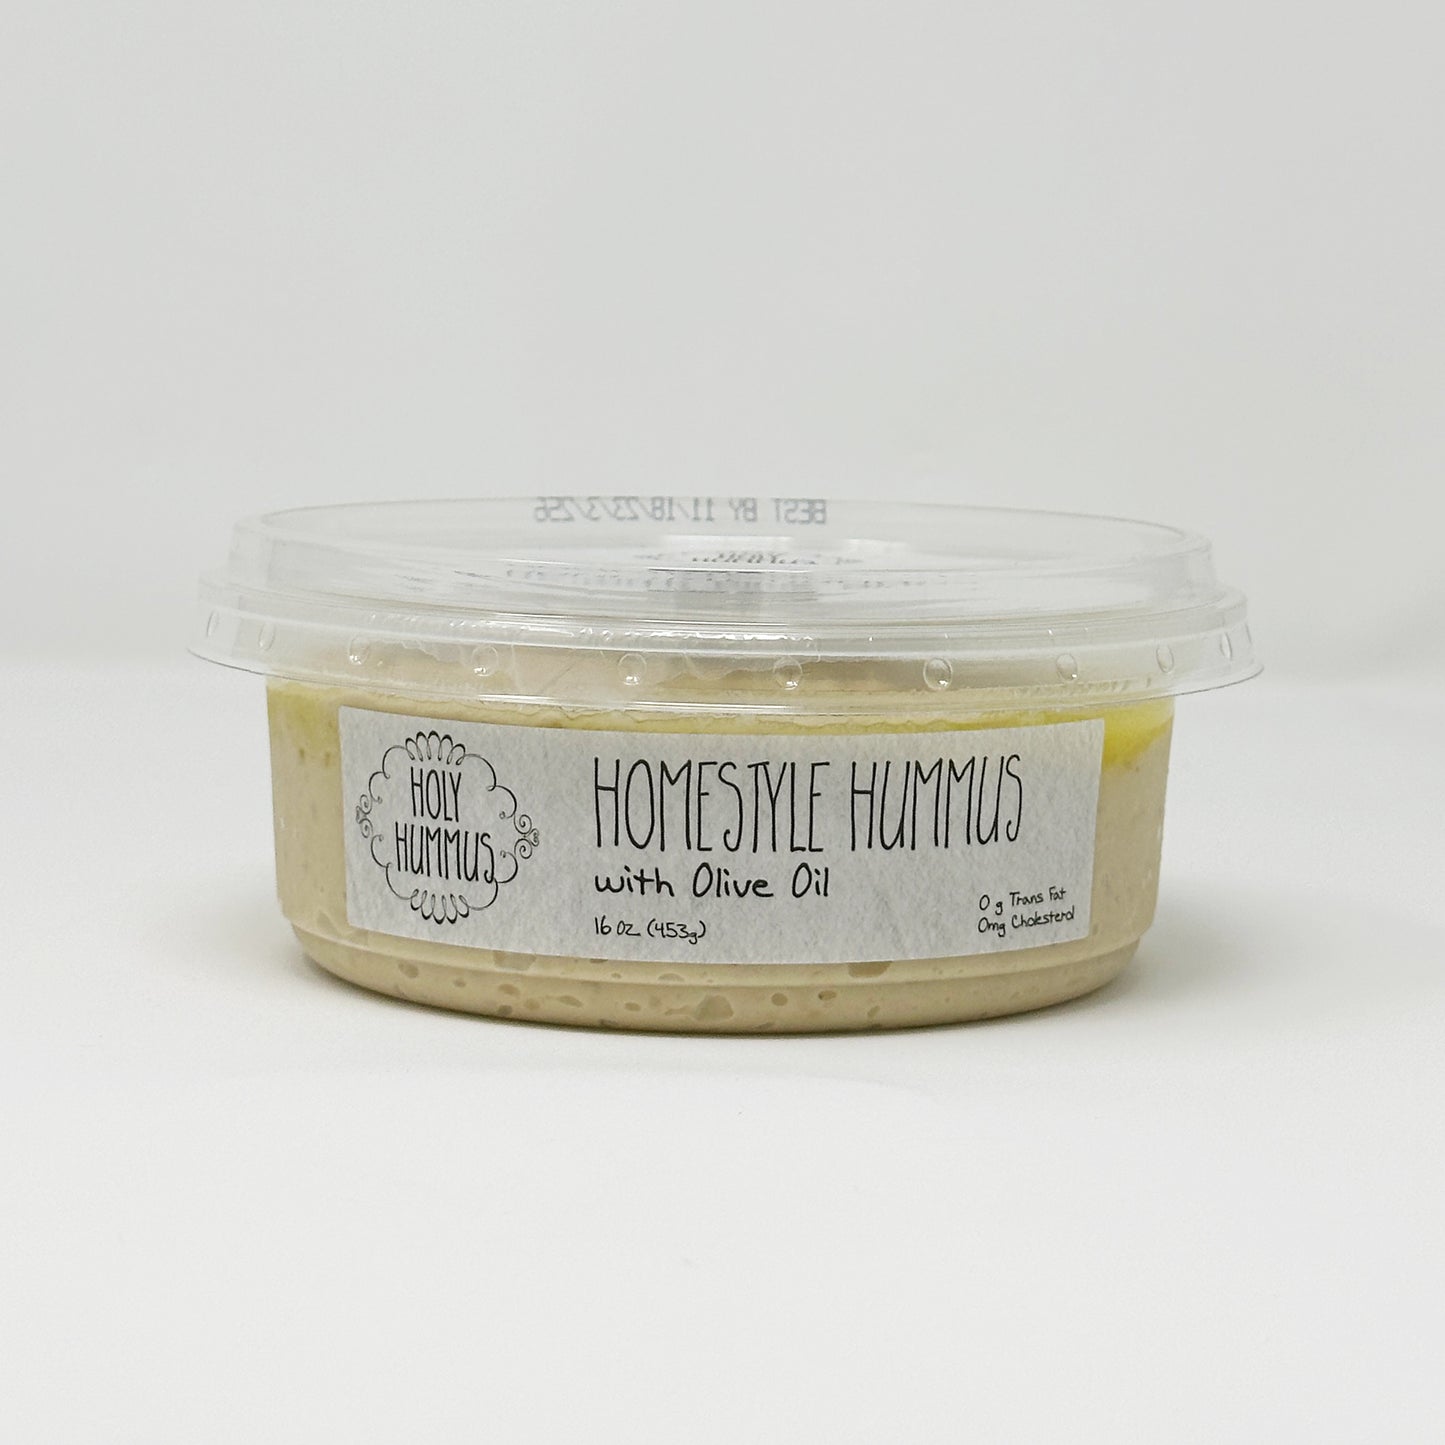 Holy Hummus Homestyle Hummus W/ Olive Oil 16 oz